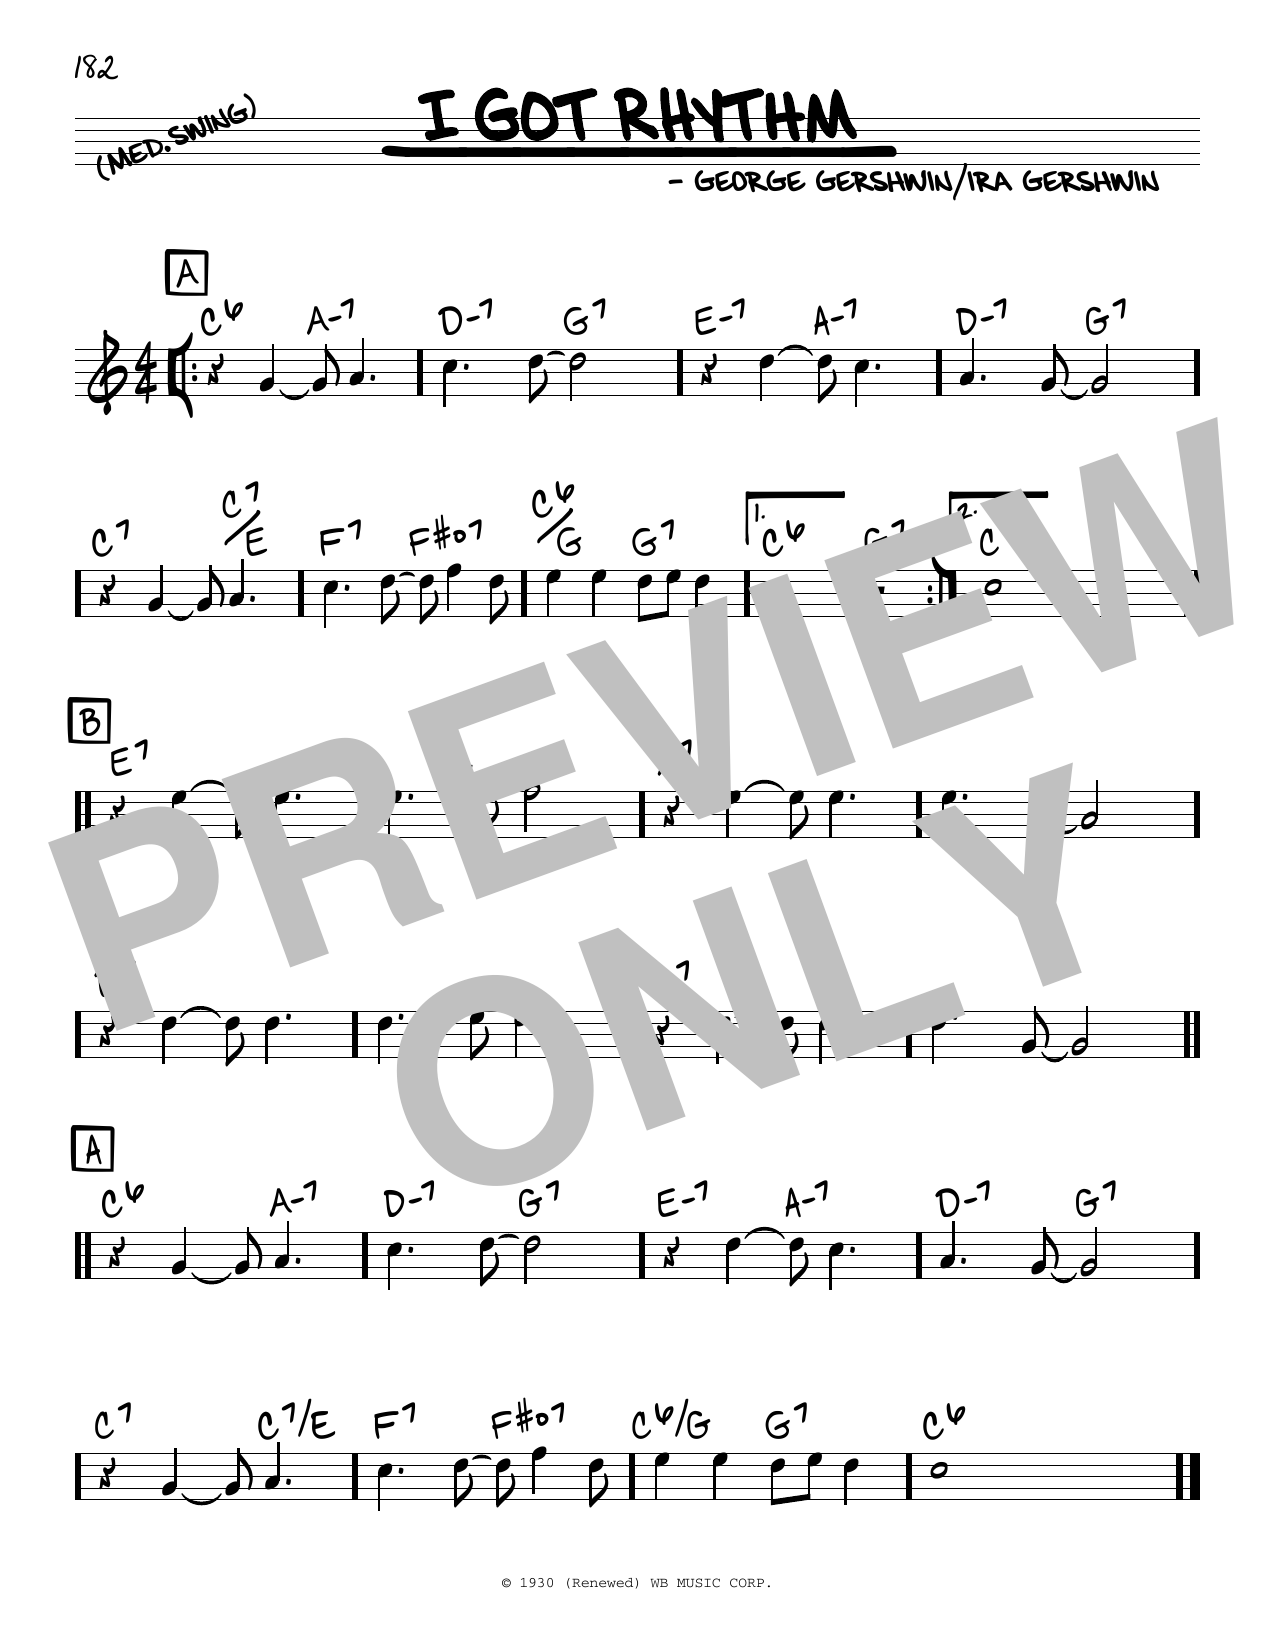 George Gershwin & Ira Gershwin I Got Rhythm Sheet Music Notes & Chords for Real Book – Melody & Chords - Download or Print PDF